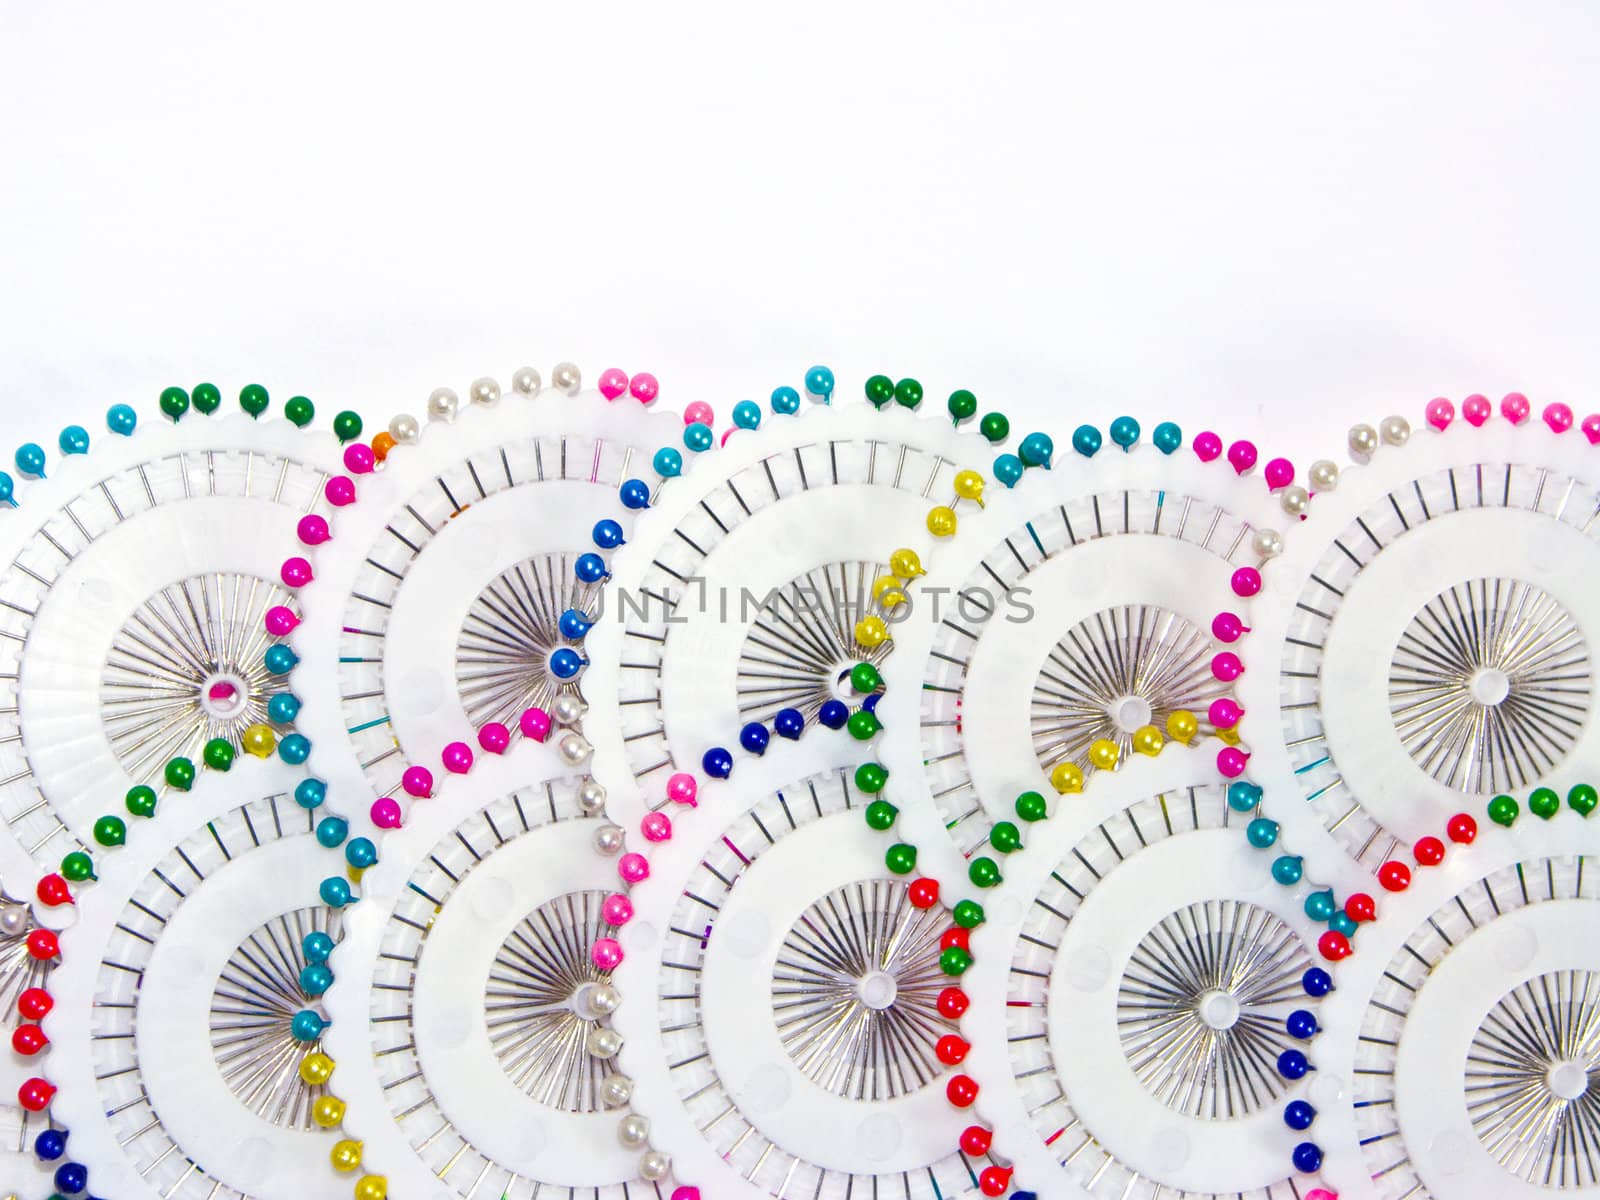 Multi-coloured needles 14 by soloir